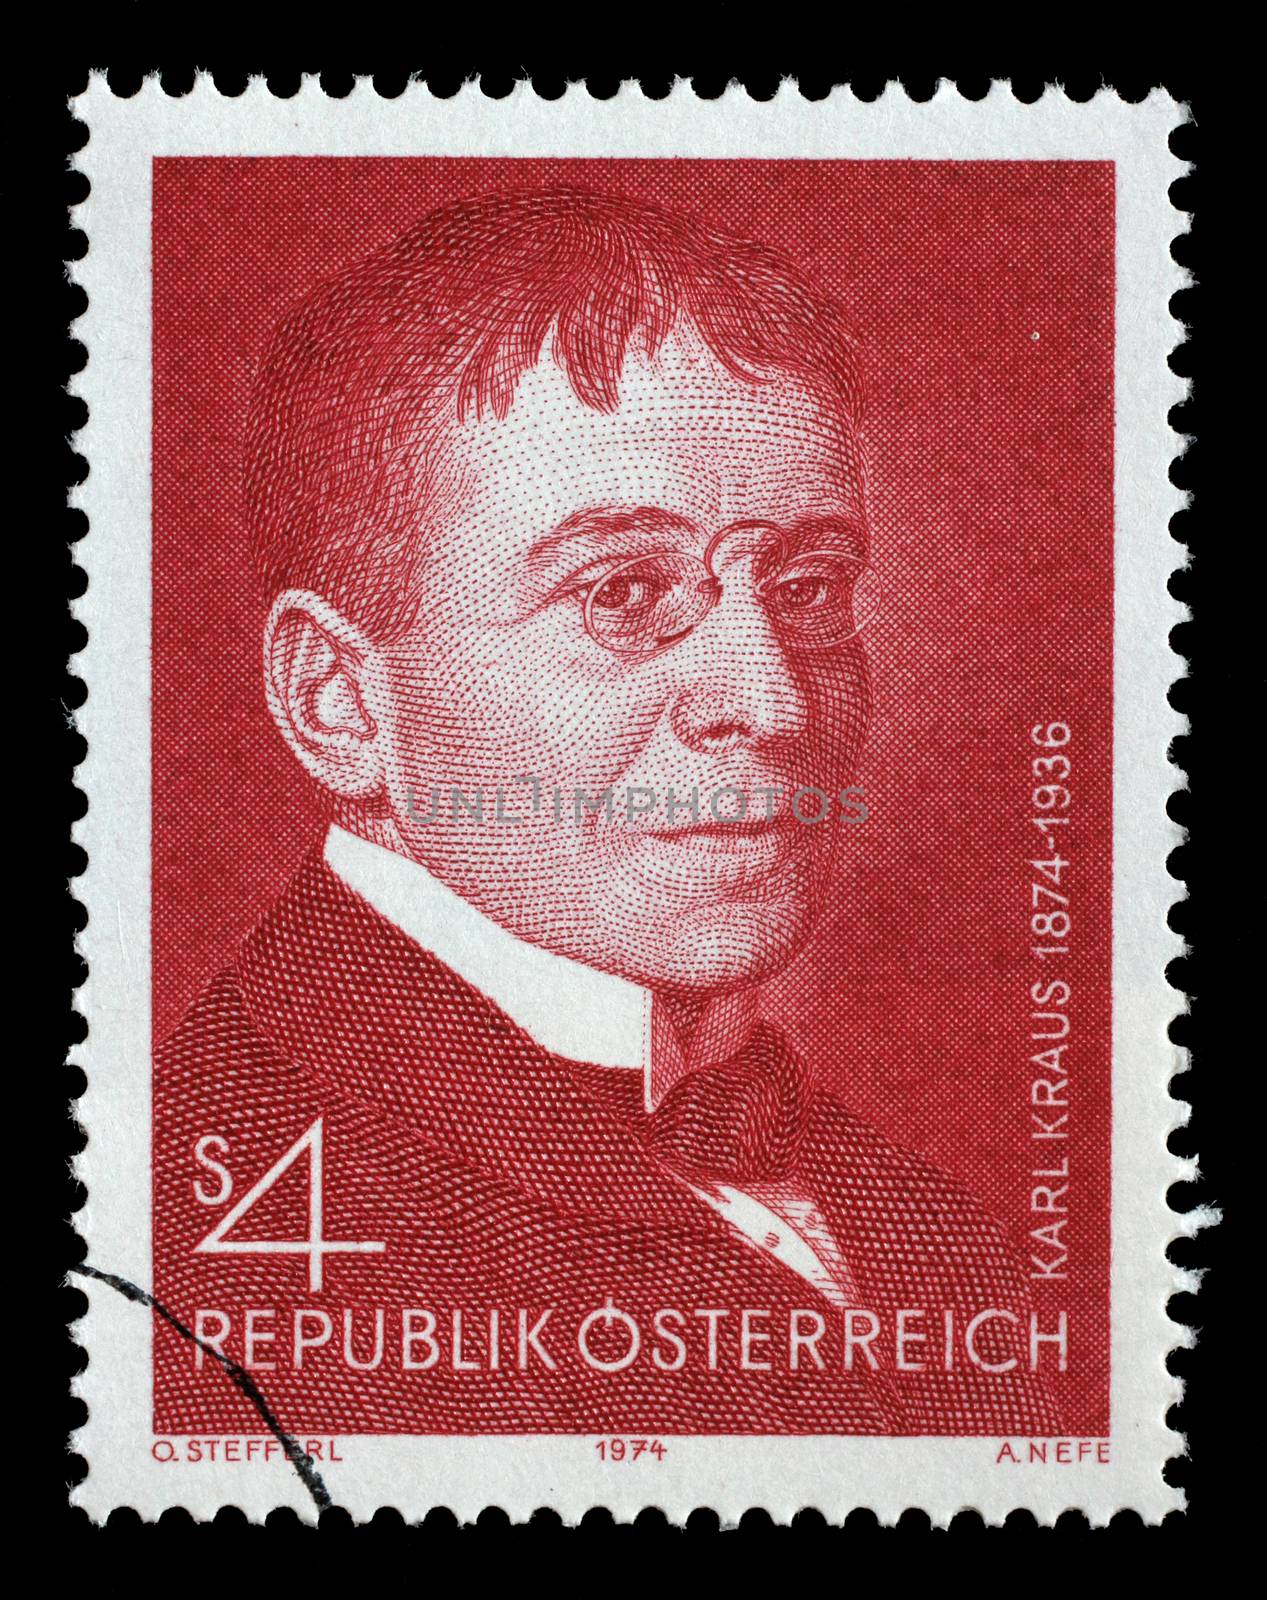 Stamp printed in the Austria shows Karl Kraus, Poet and Satirist, circa 1974